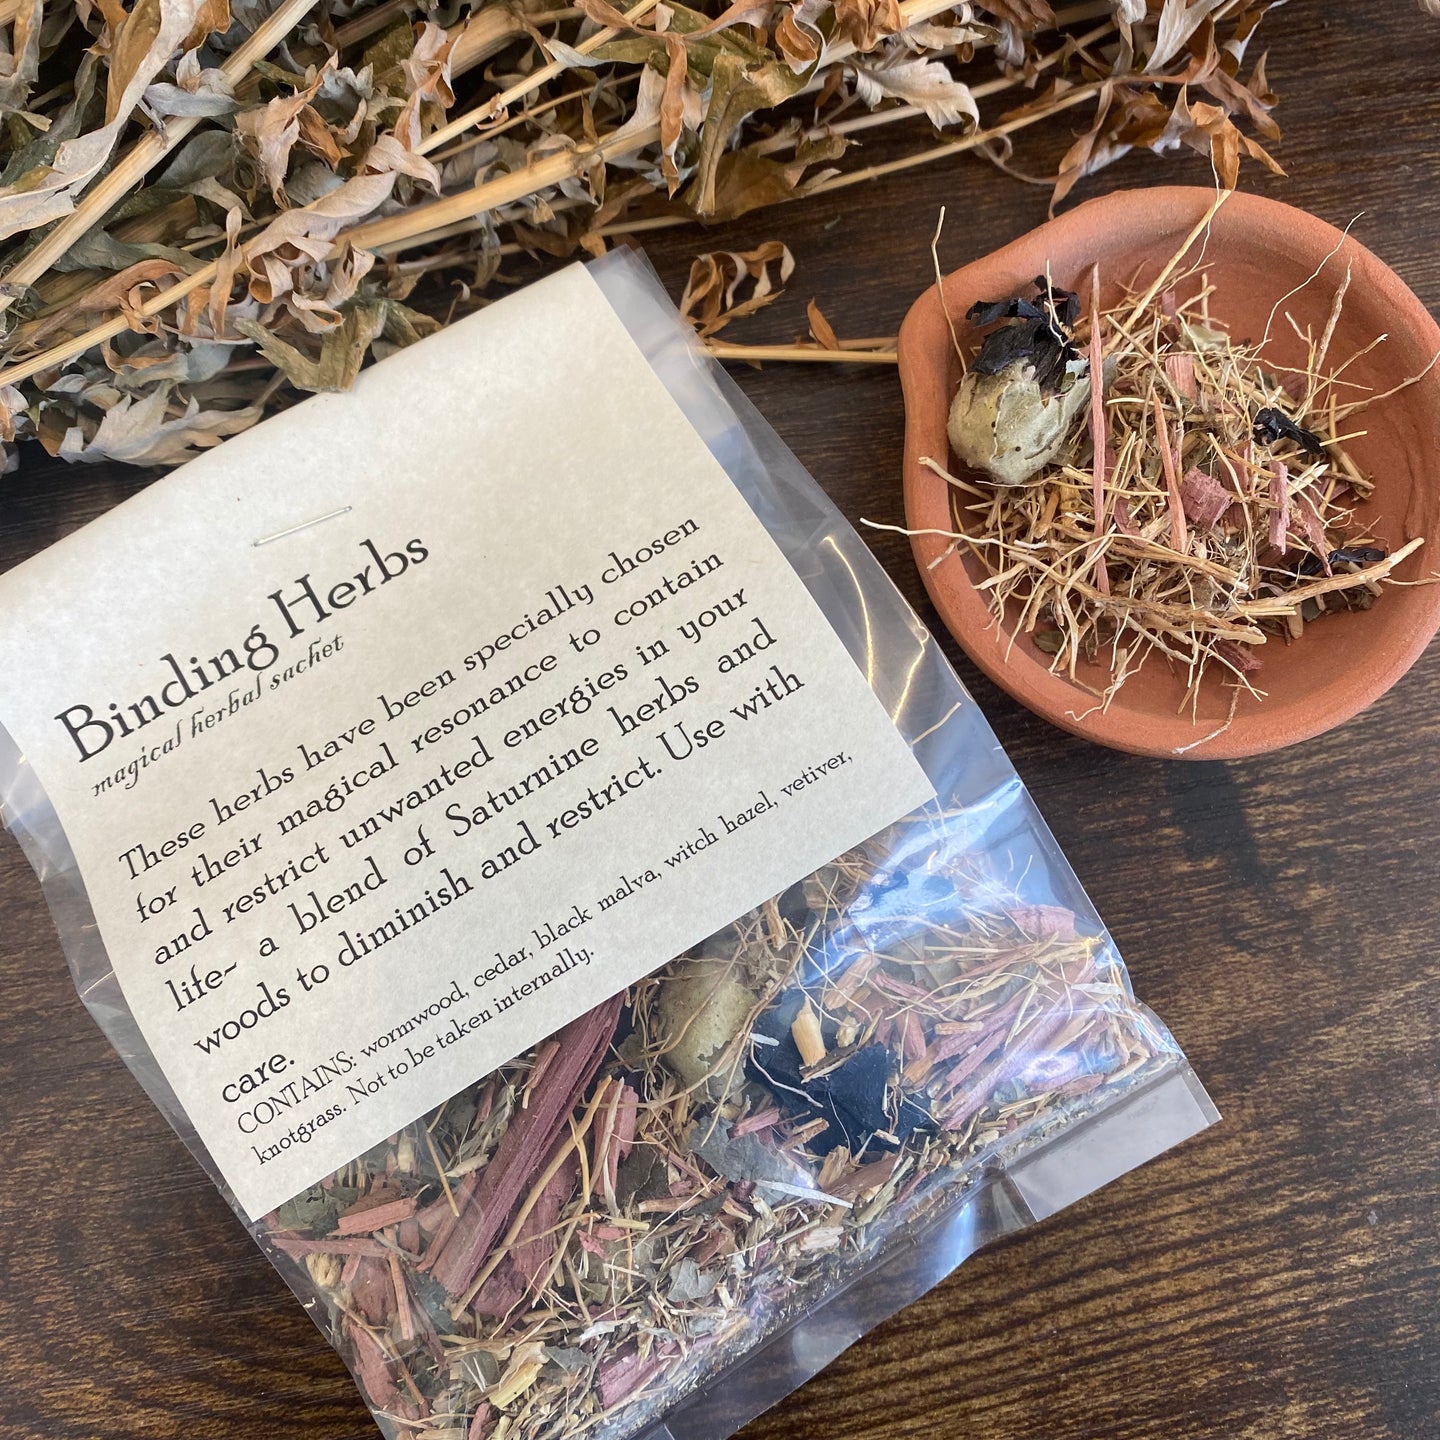 Magical Herb Blend: Binding Herbs